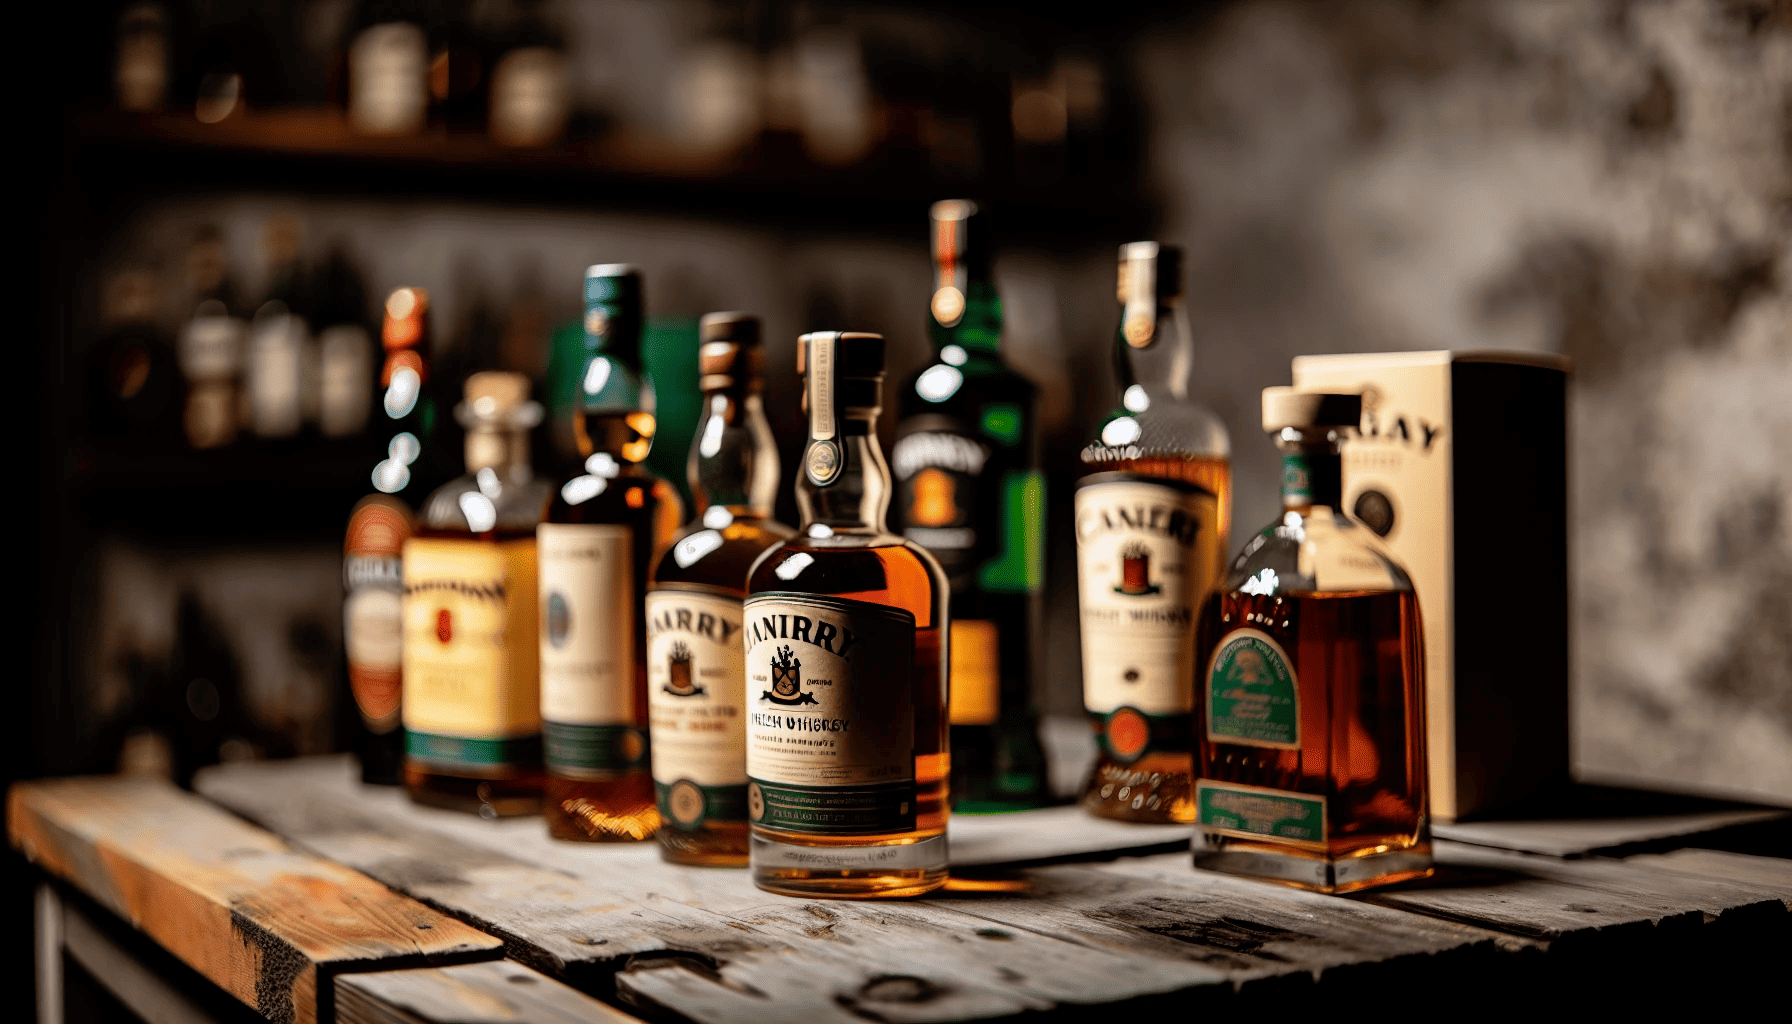 Bottles of Irish whiskey on a wooden table